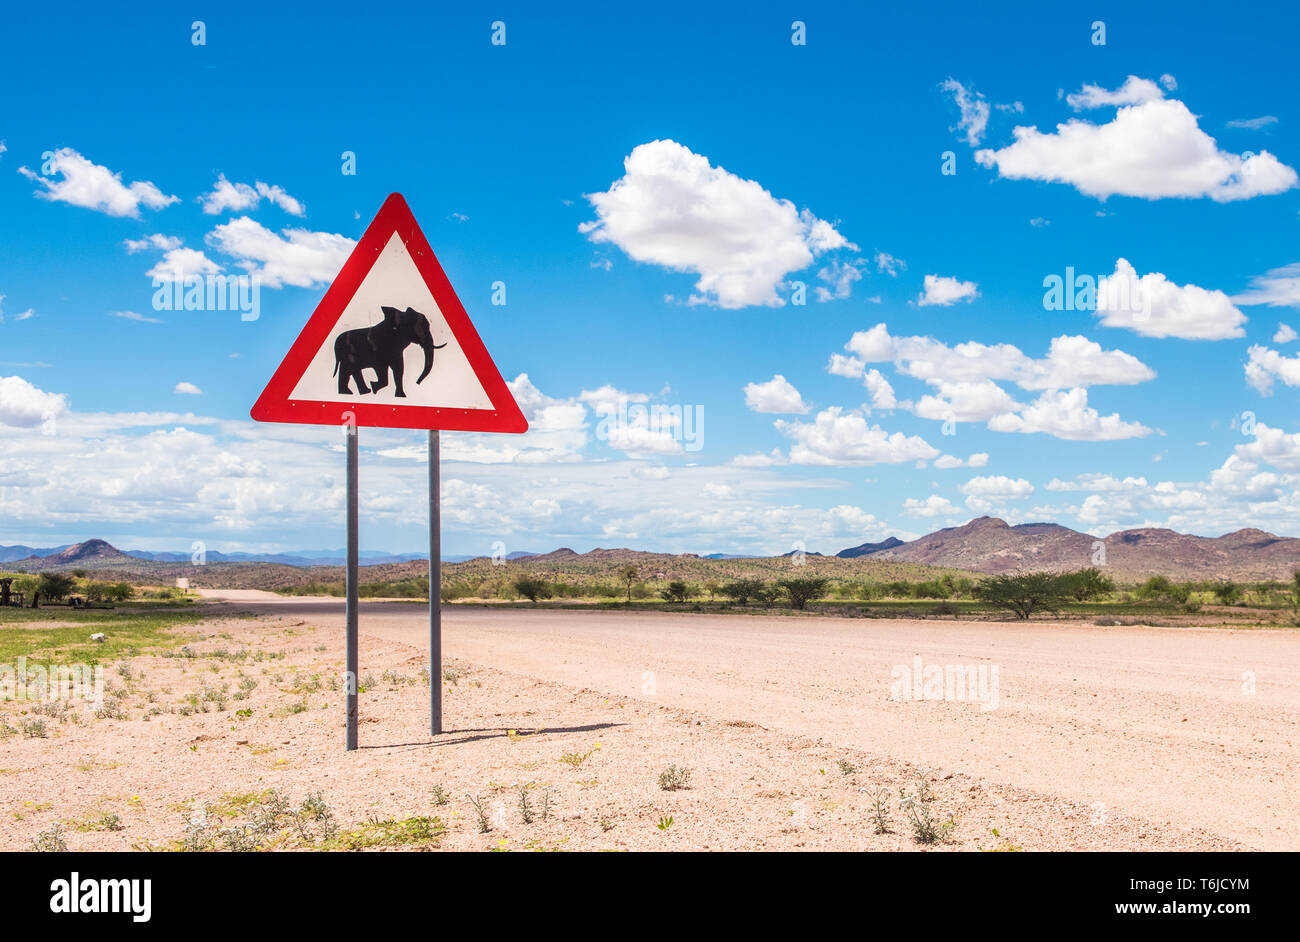 Les éléphants crossing warning sign, Damaraland, Namibie Banque D'Images